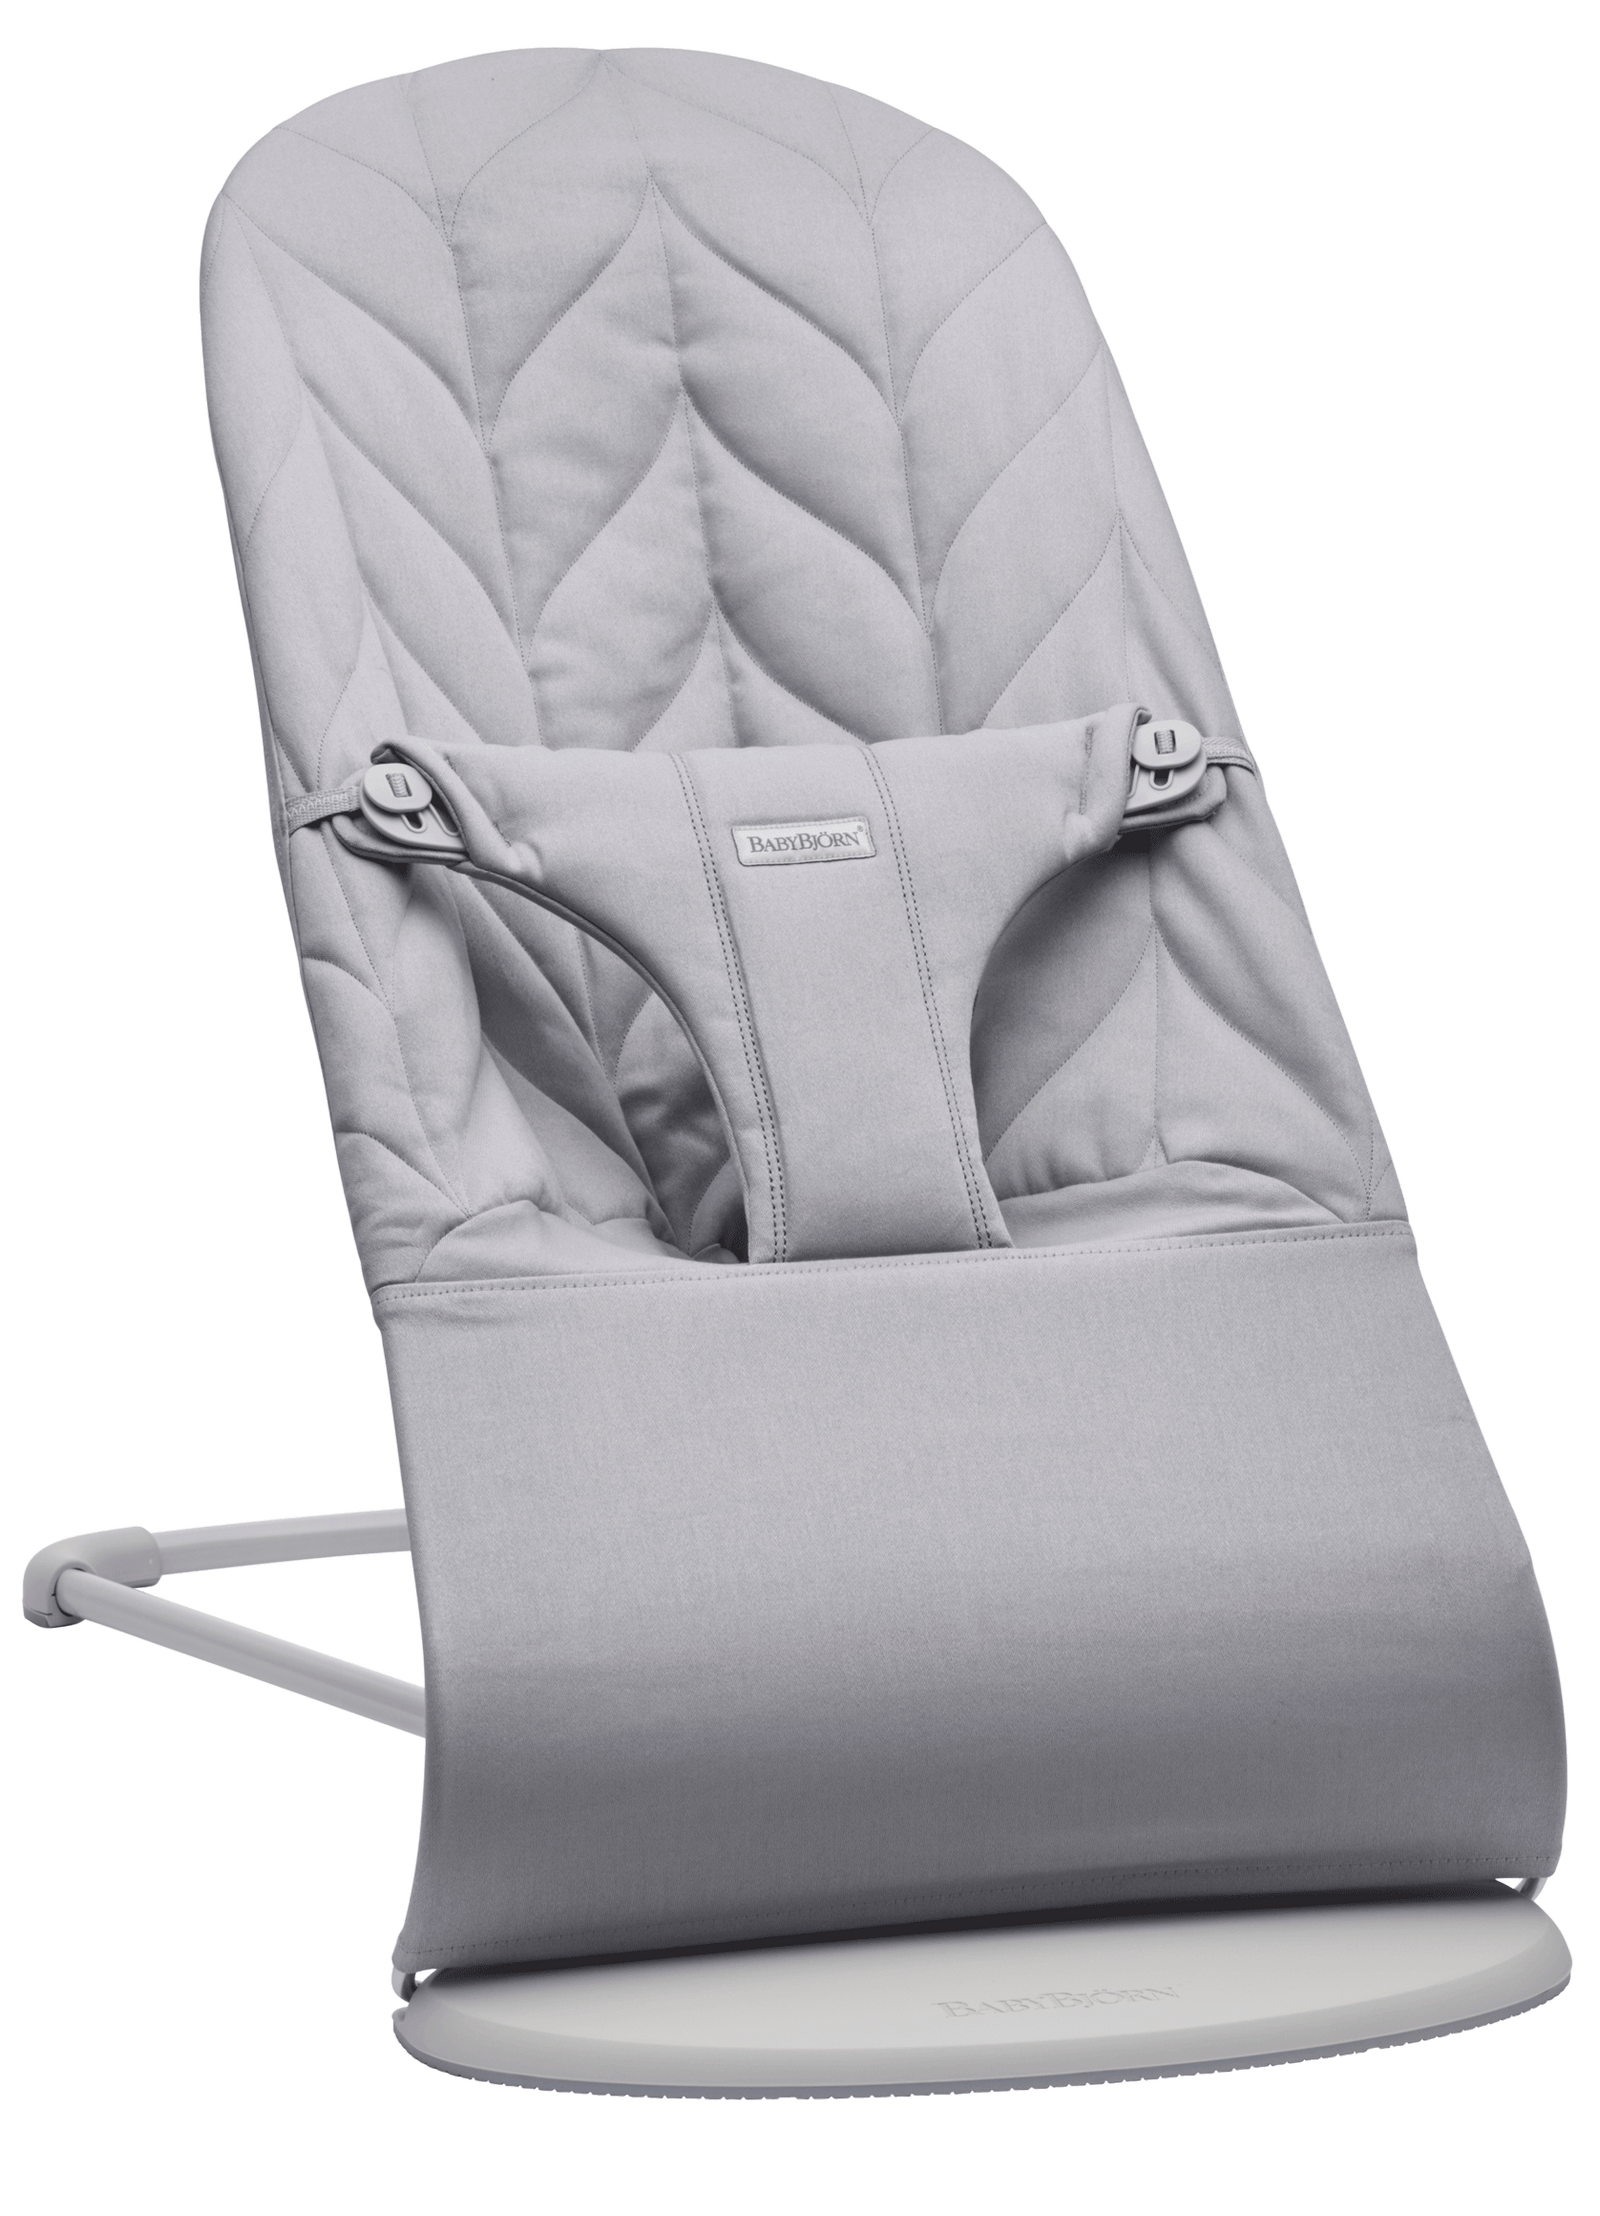 BabyBjörn Bliss 嬰兒搖椅 瑞典製造-Quilted Cotton-Light Grey-Suchprice® 優價網